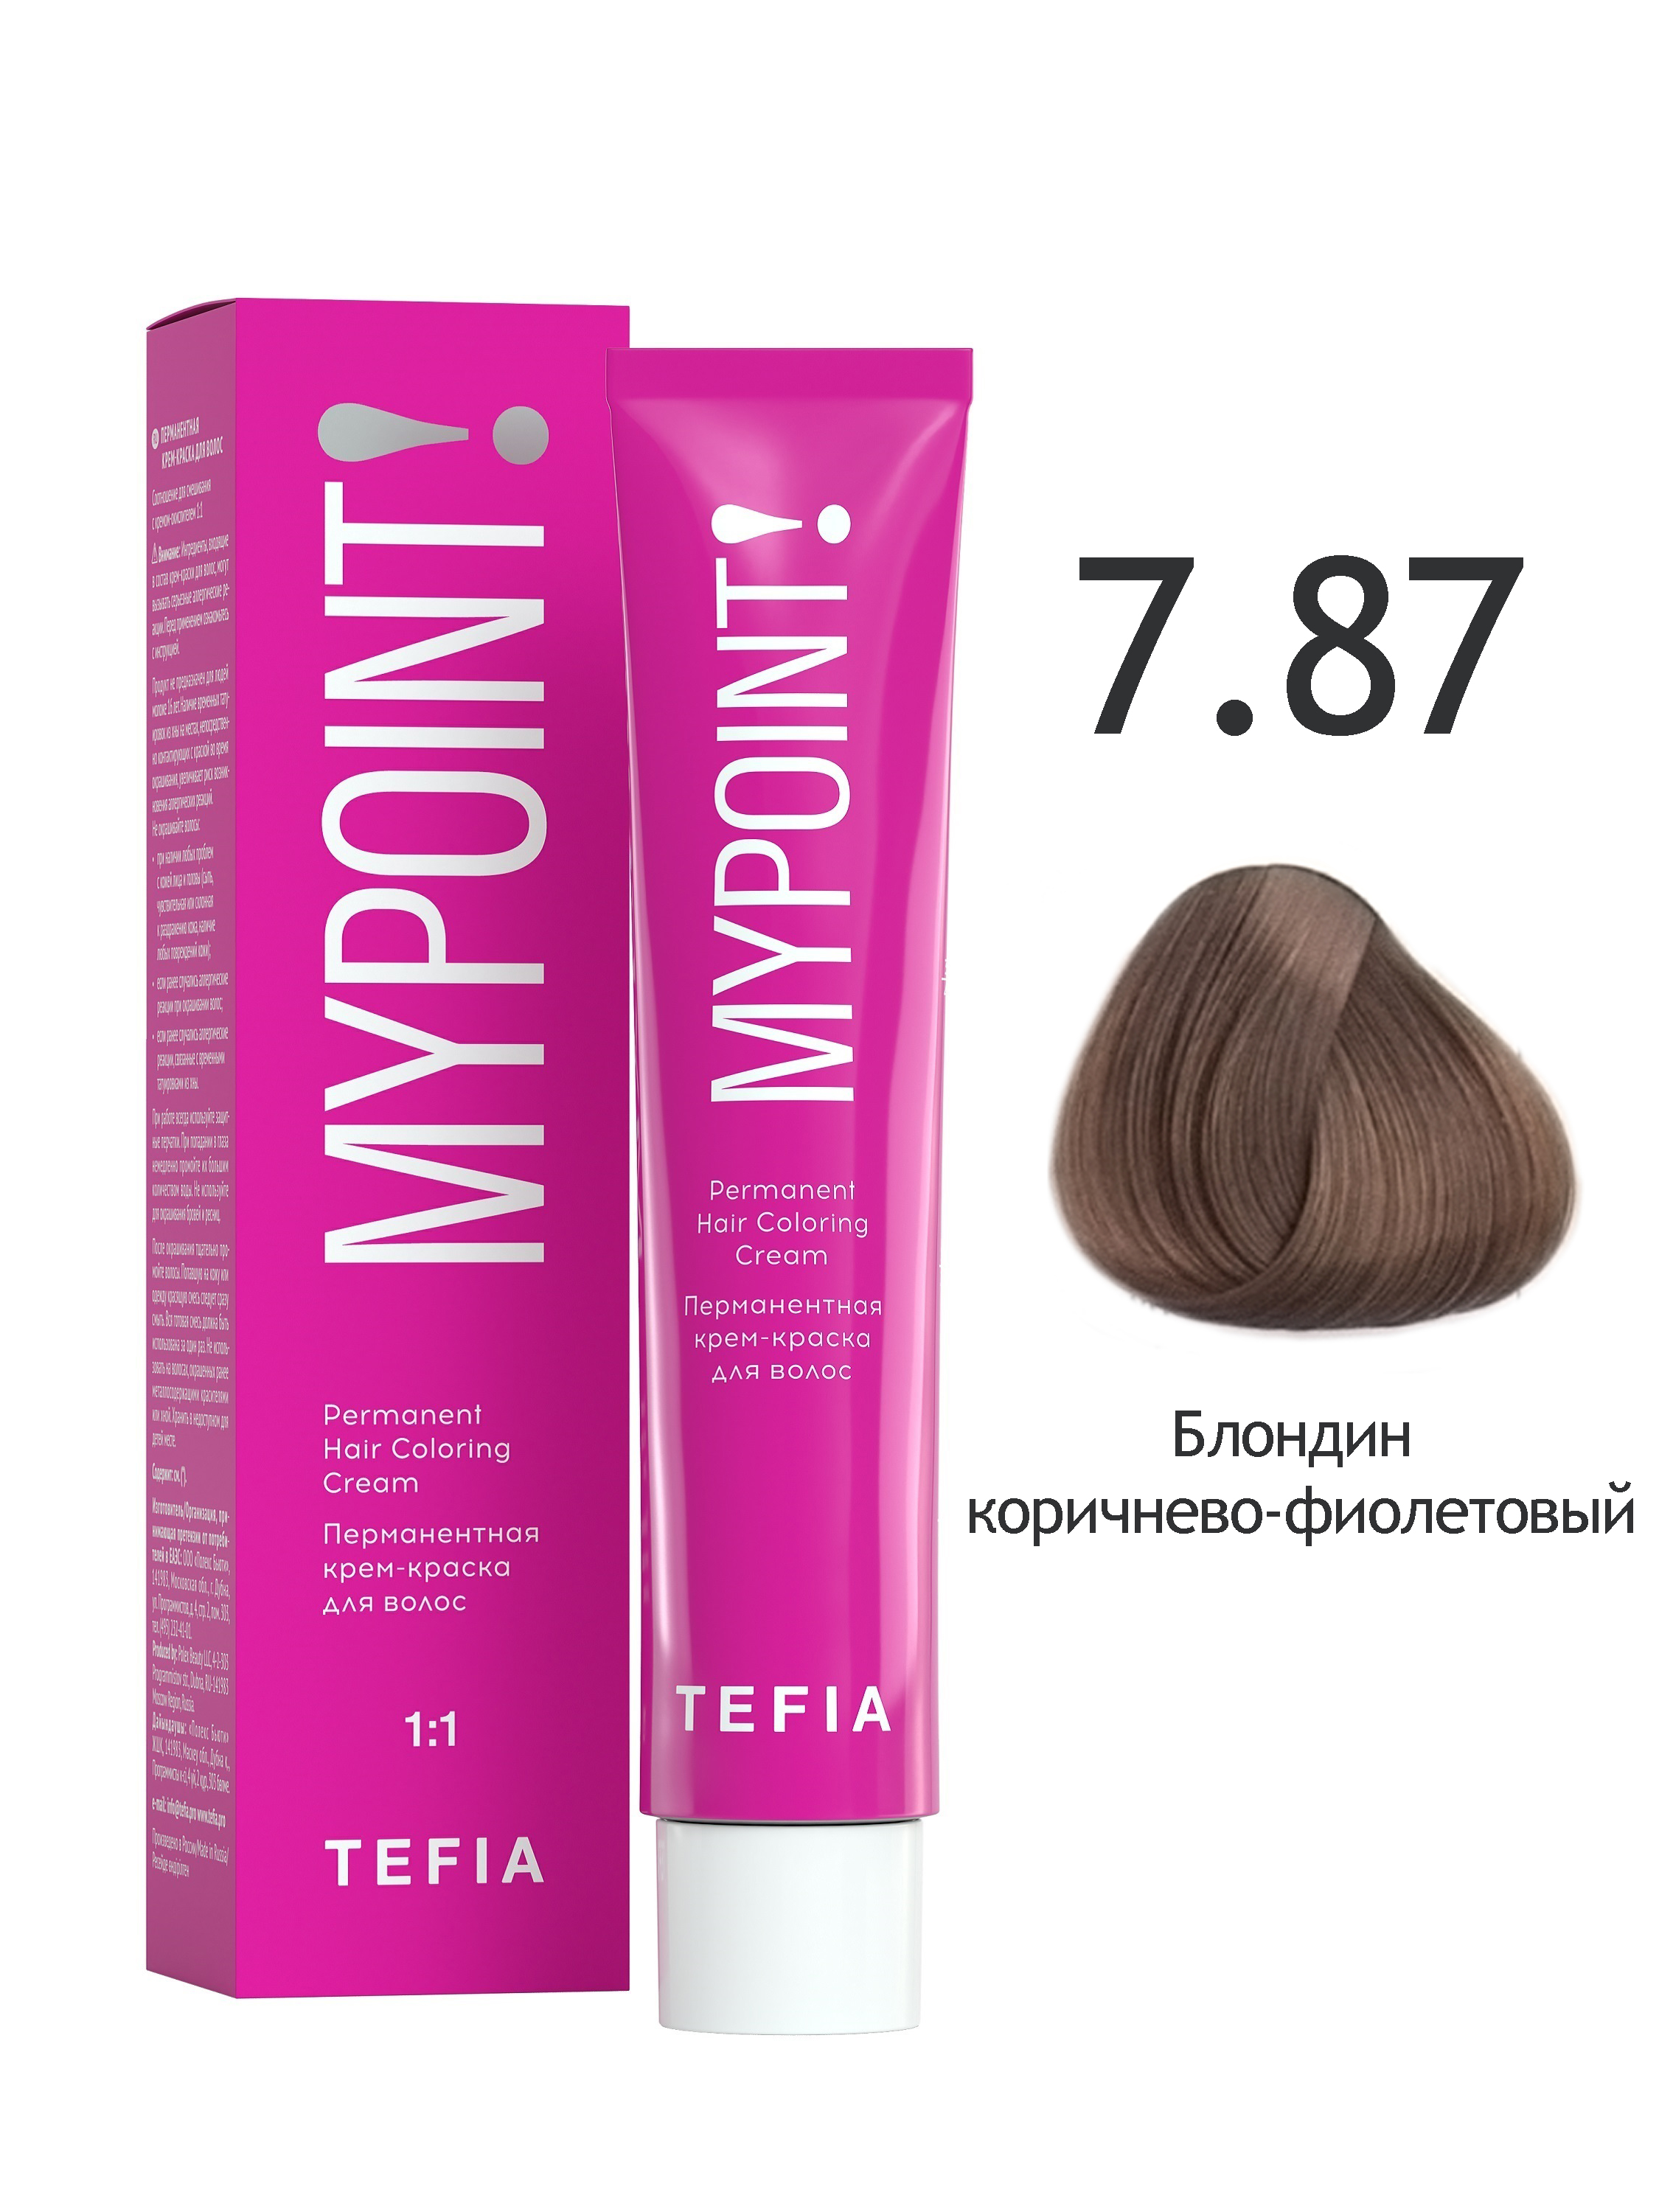 Крем-краска Tefia MYPOINT 7.87 блондин коричнево-фиолетовый 60 мл краска tefia ambient 8 877 светлый блондин интенсивный коричнево фиолетовый 60 мл